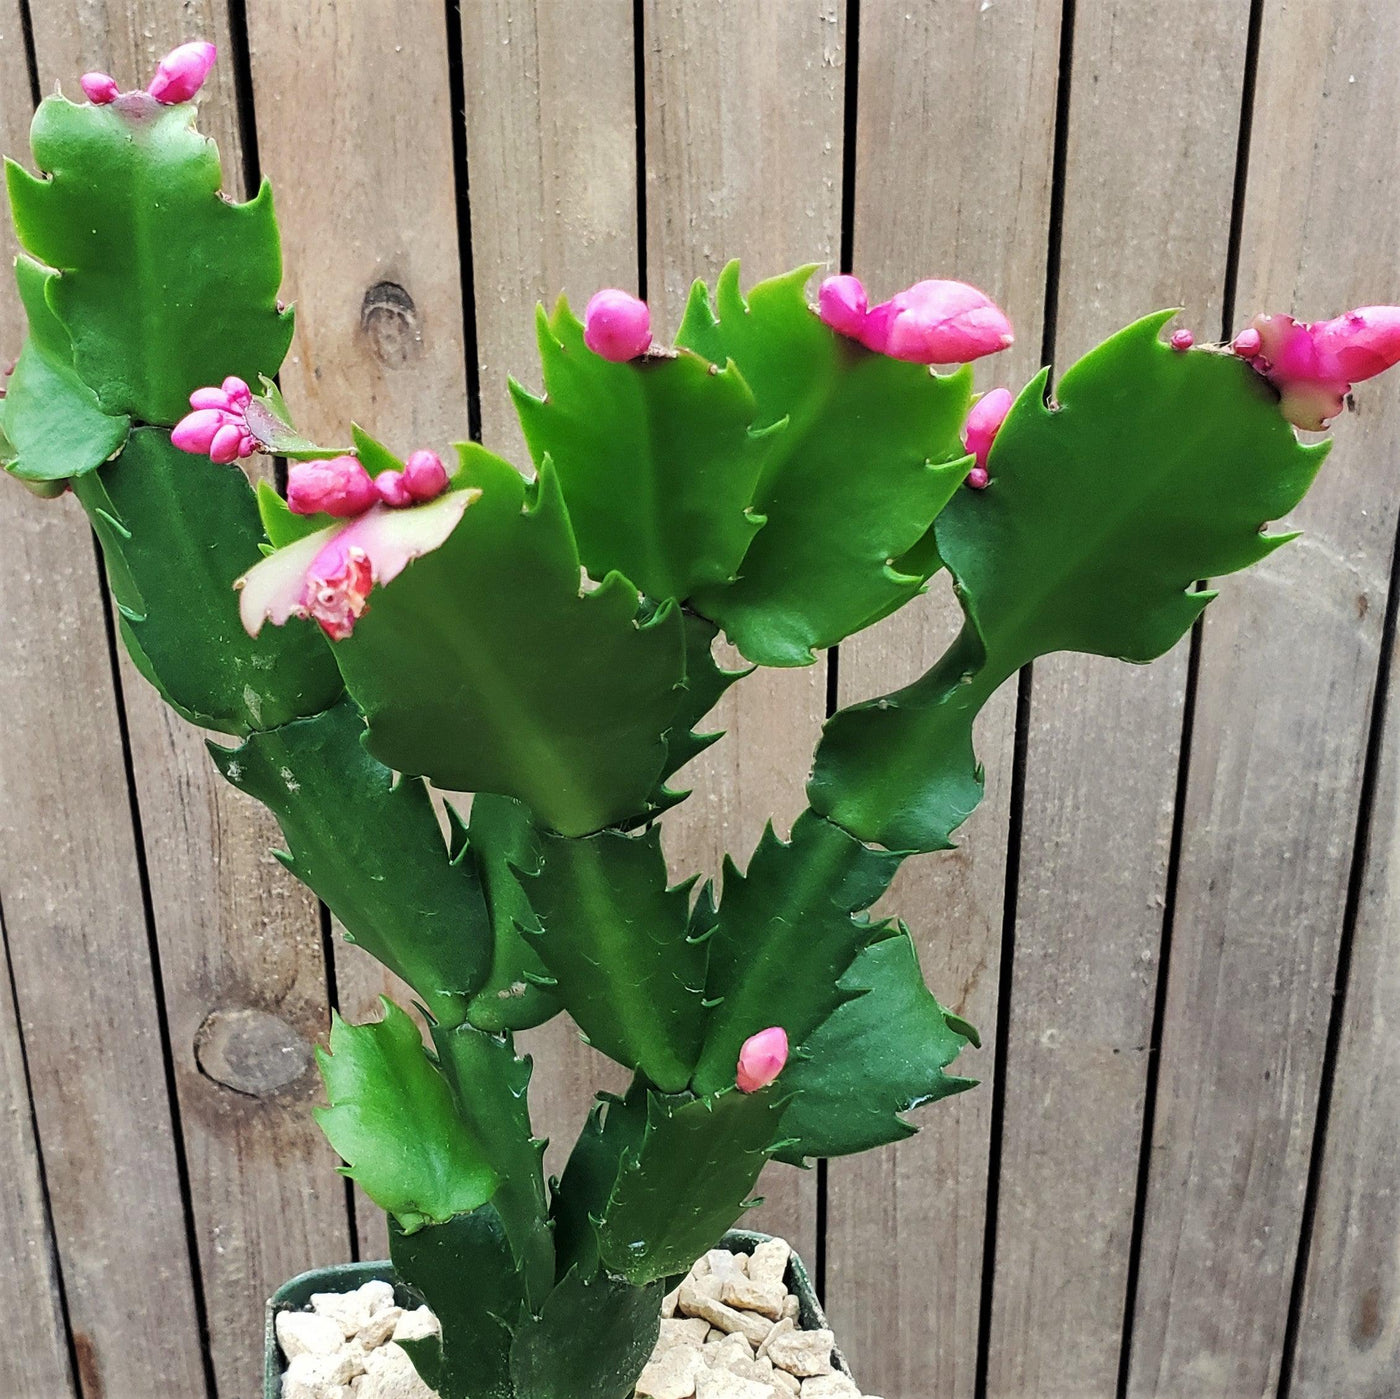 Thanksgiving Cactus - Schlumbergera truncata